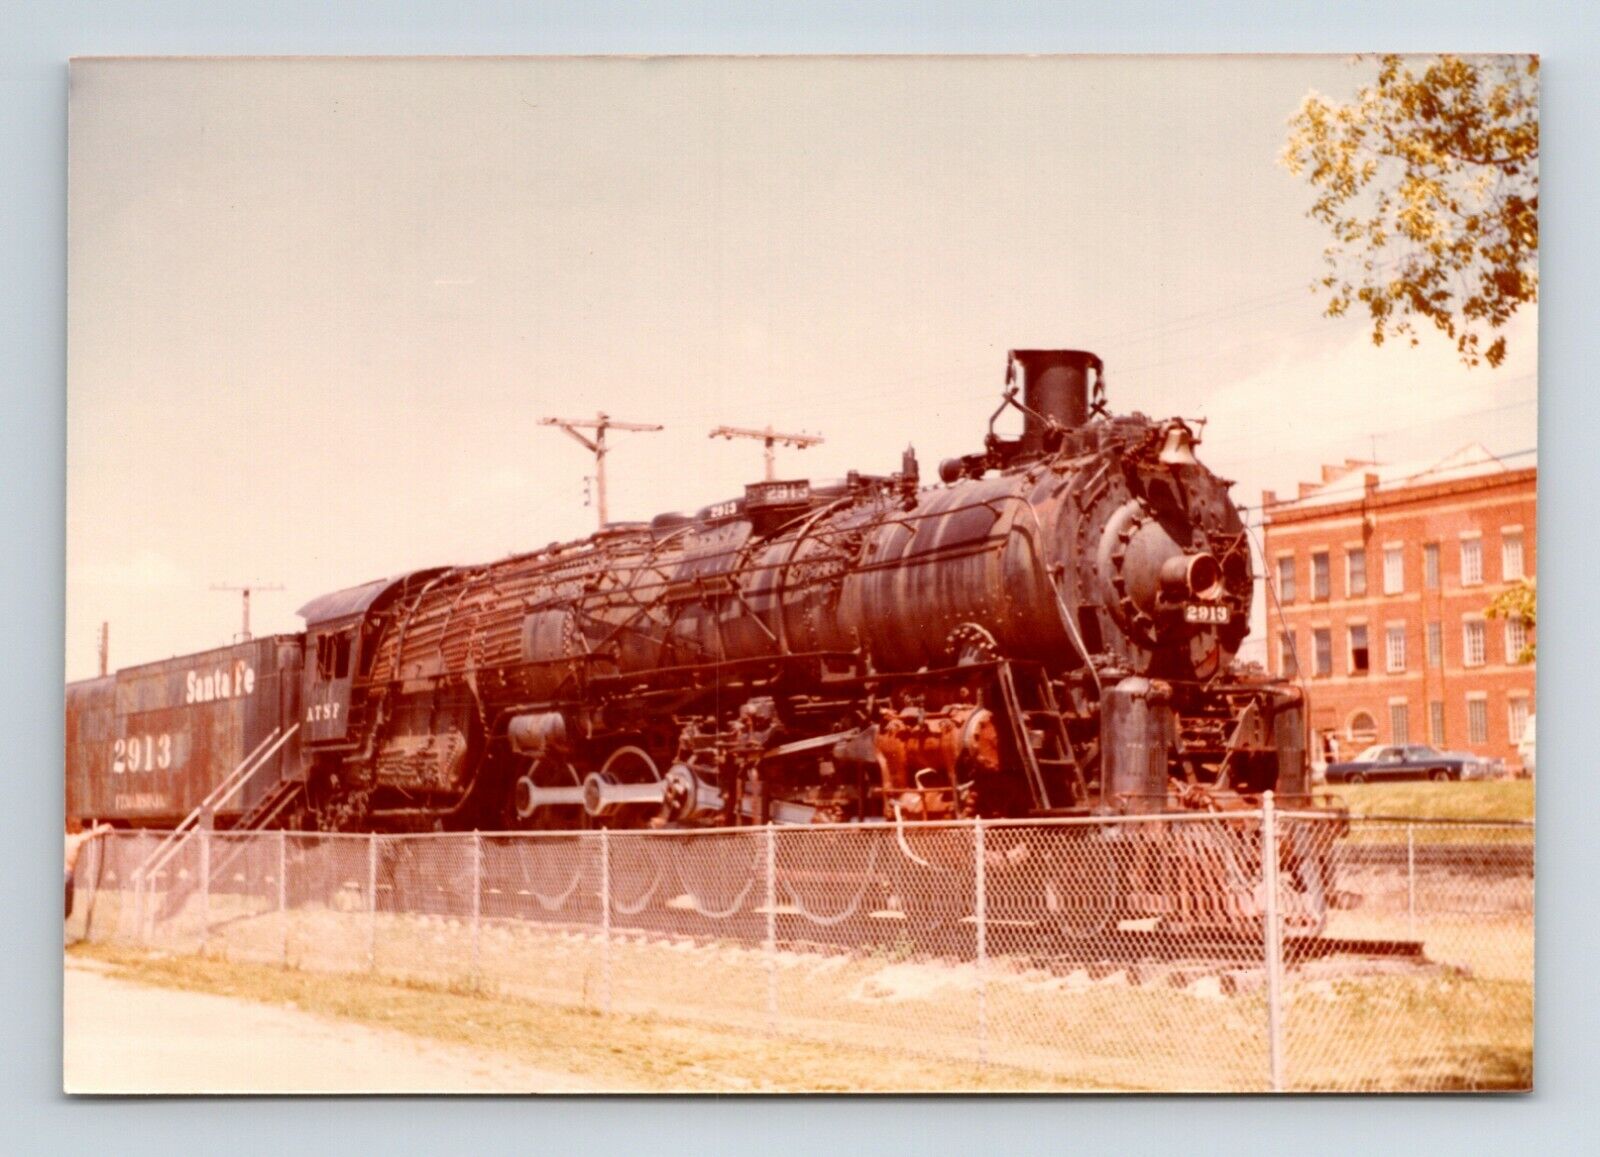 wd3 Original Photo 1977 Santa Fe Locomotive ATSF # 2913 4-8-4 379a